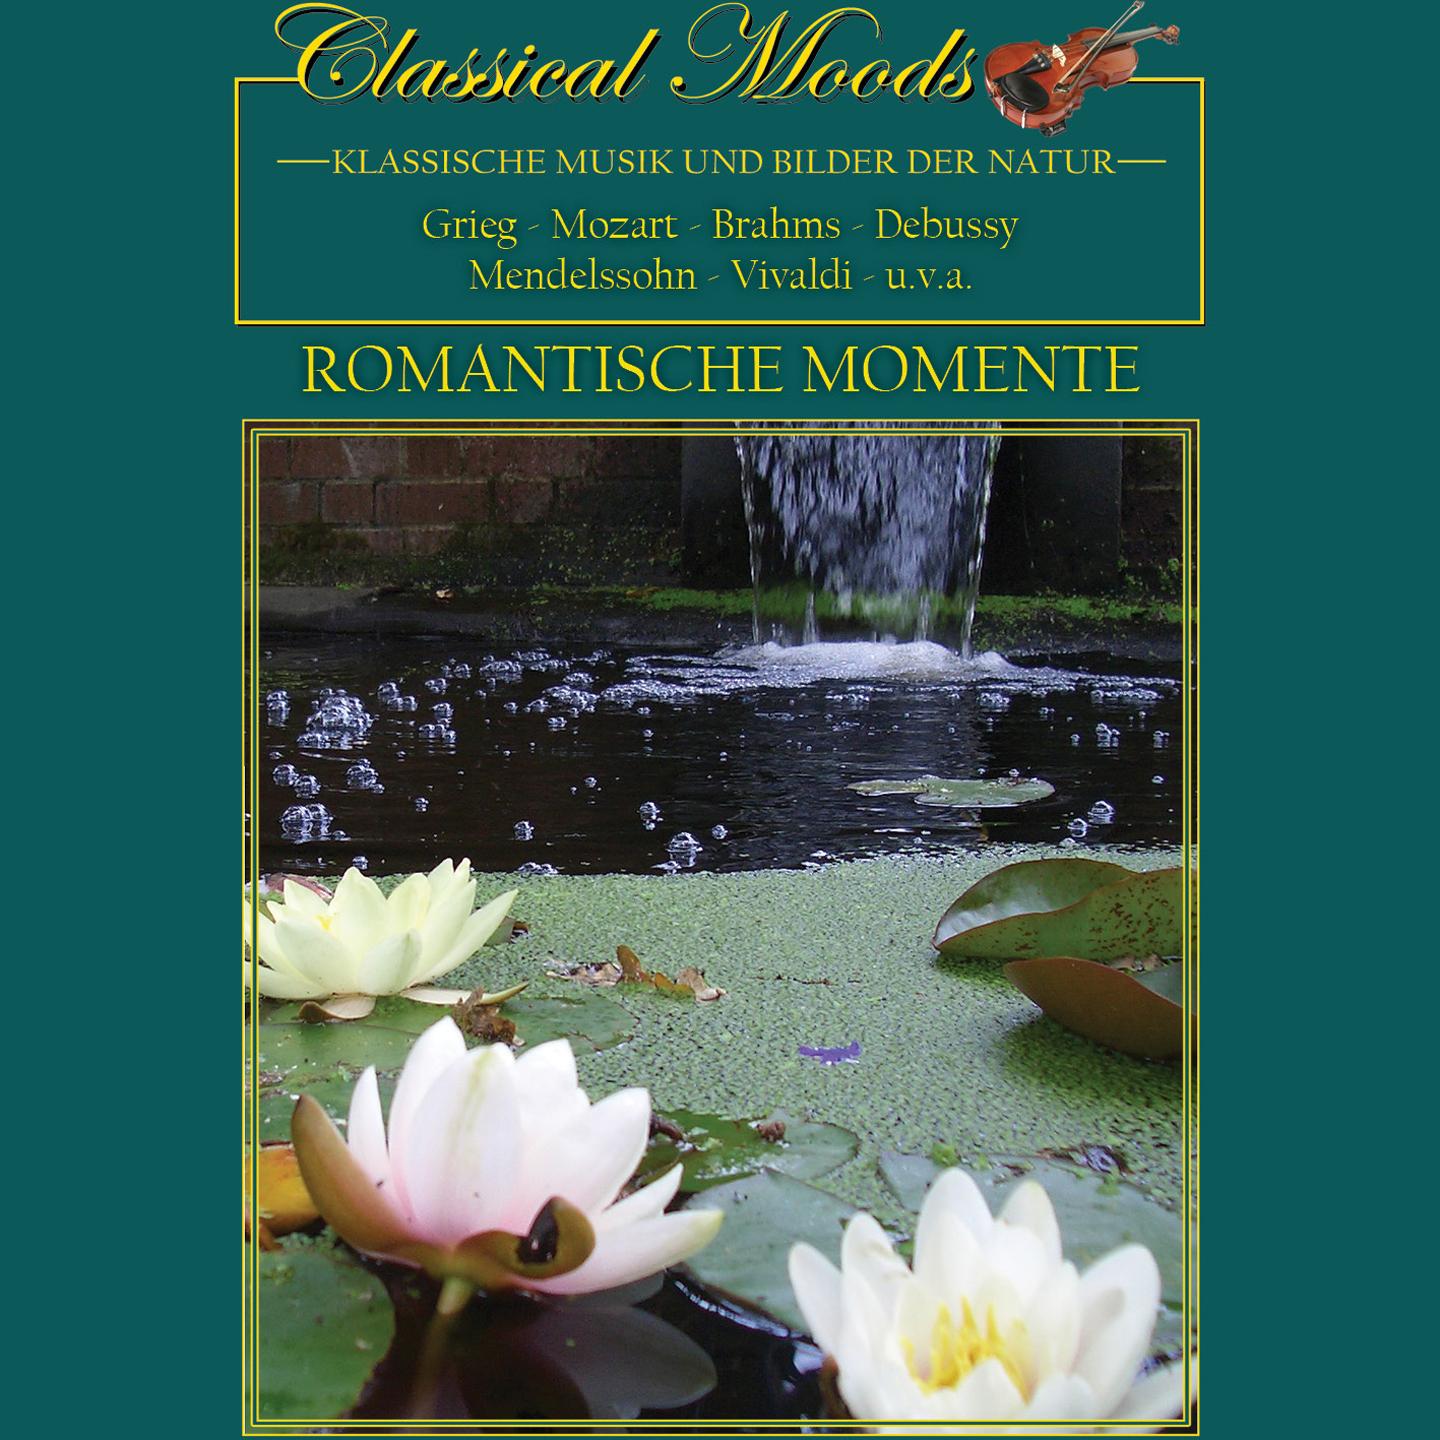 Classical Moods - Romantic Moments